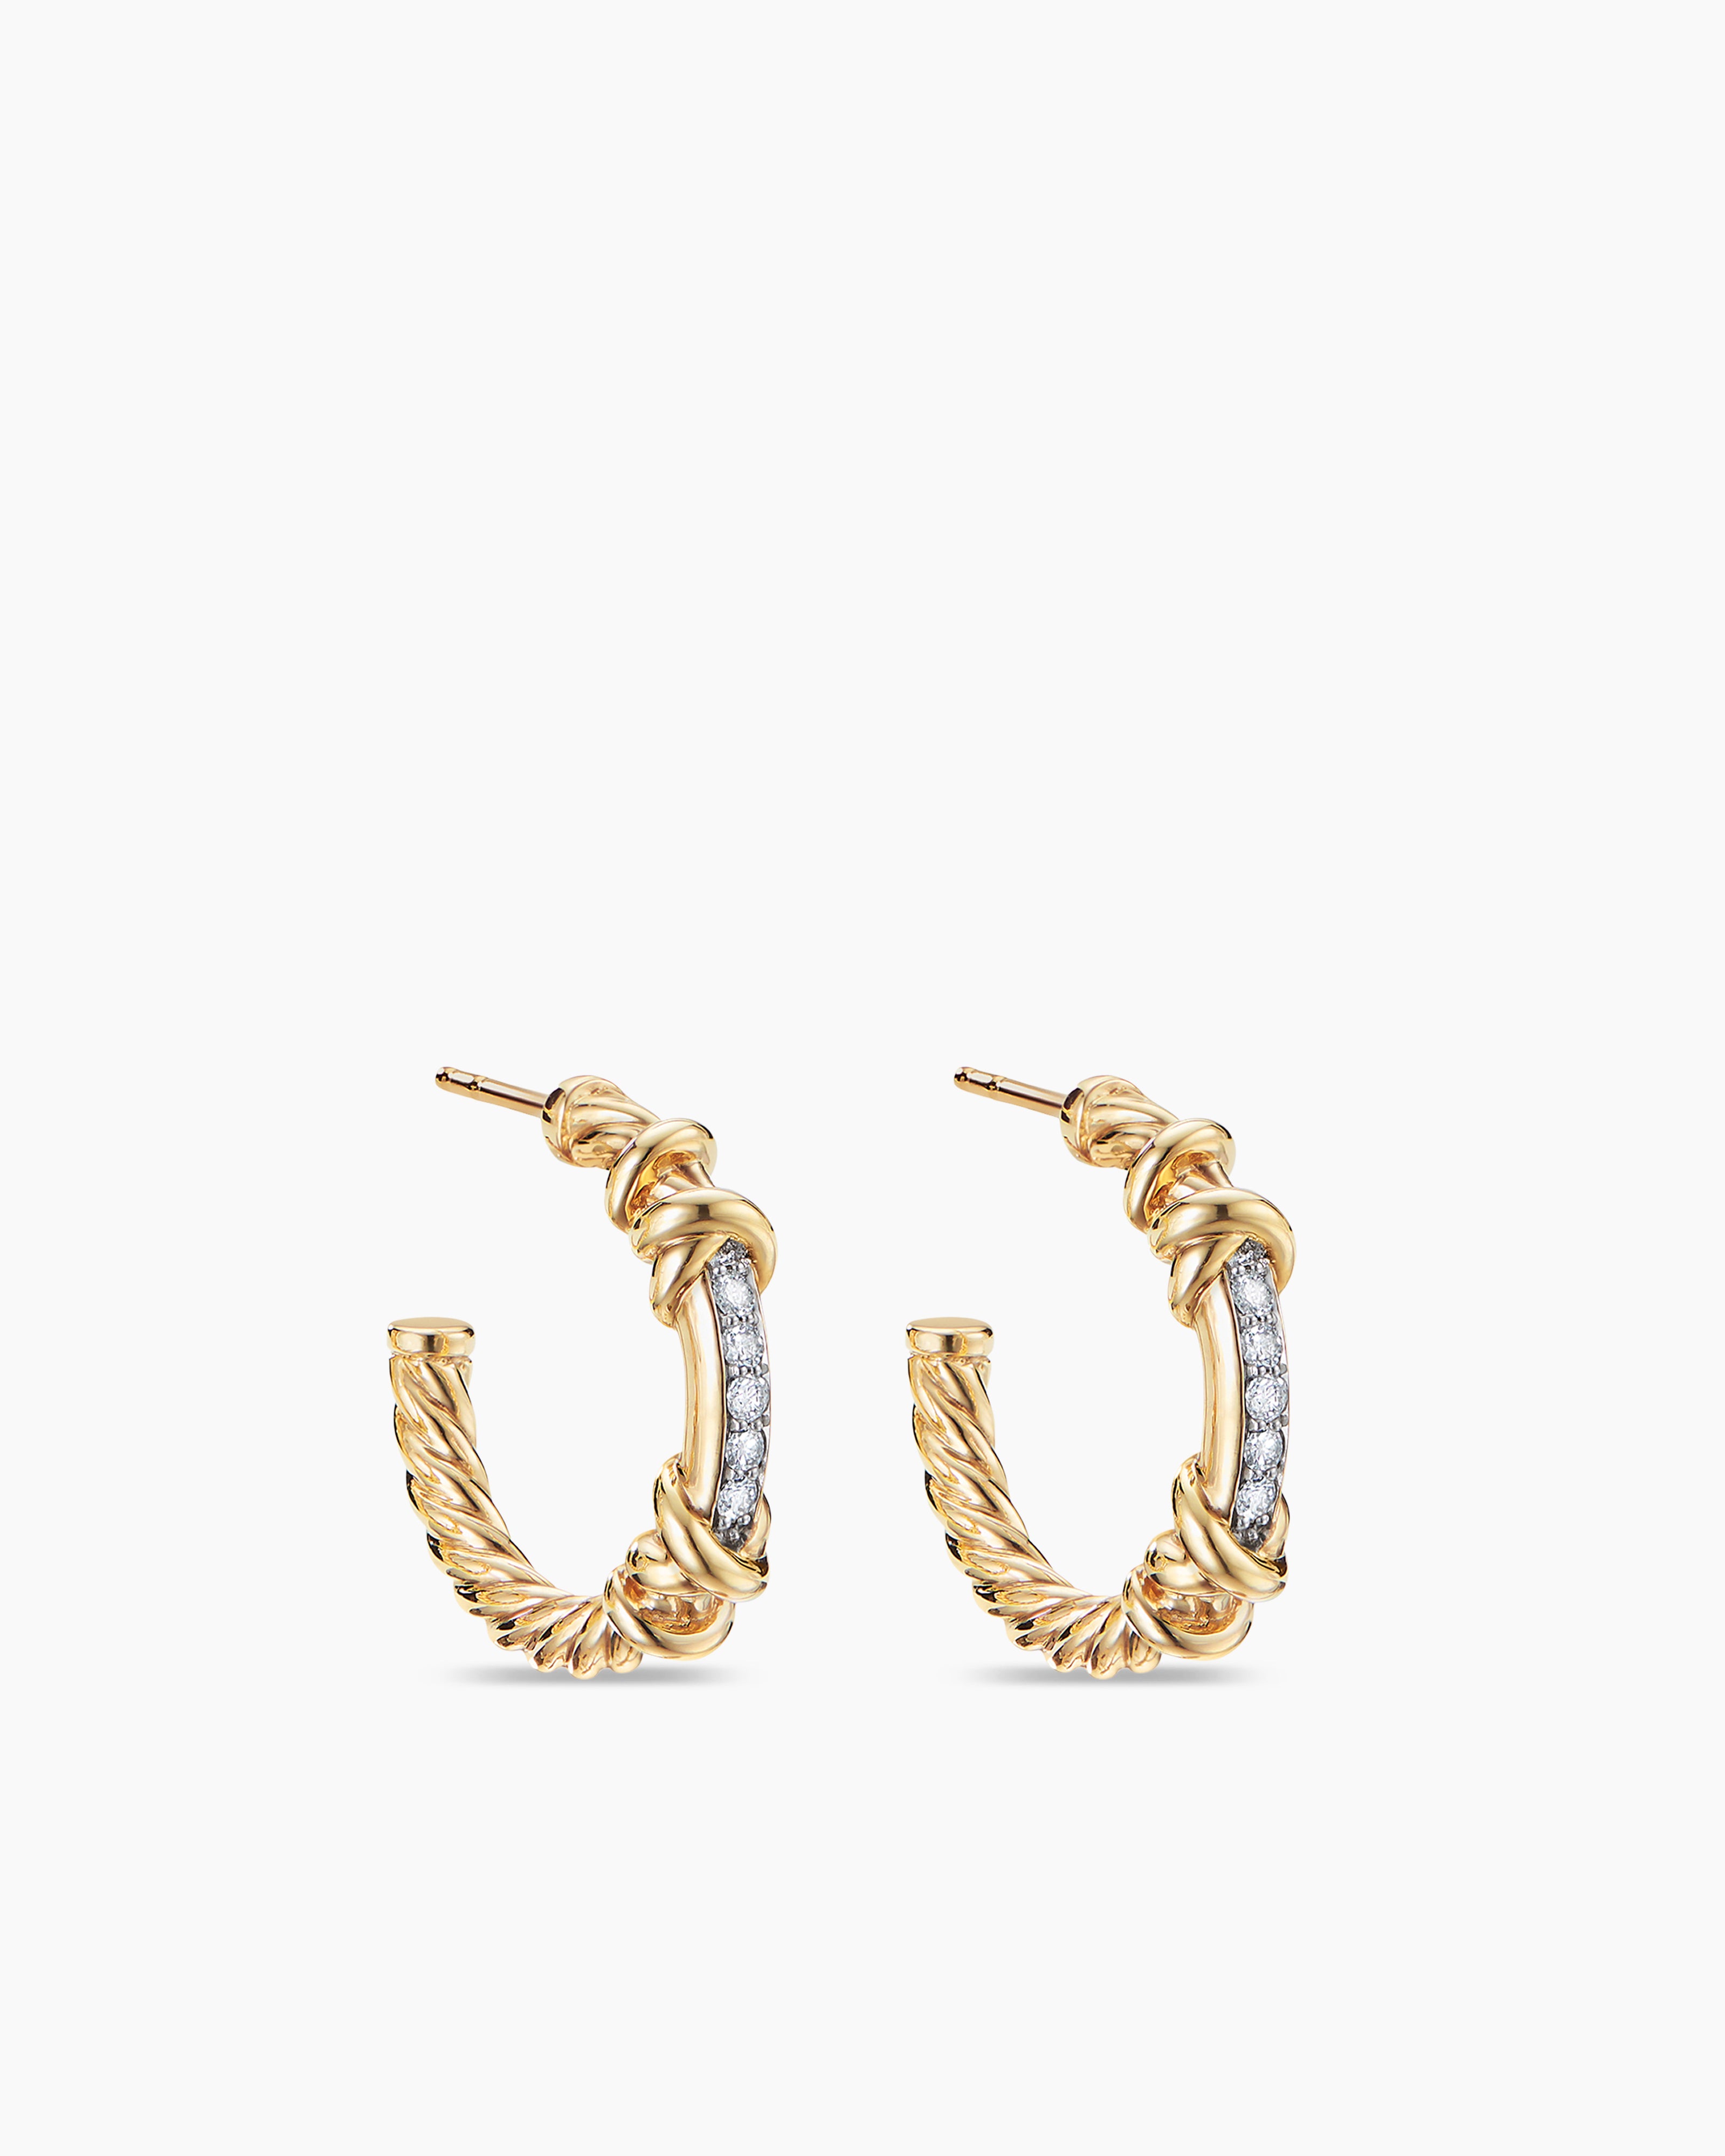 David Yurman Helena Tassel Earrings in 18K Yellow Gold with Diamonds